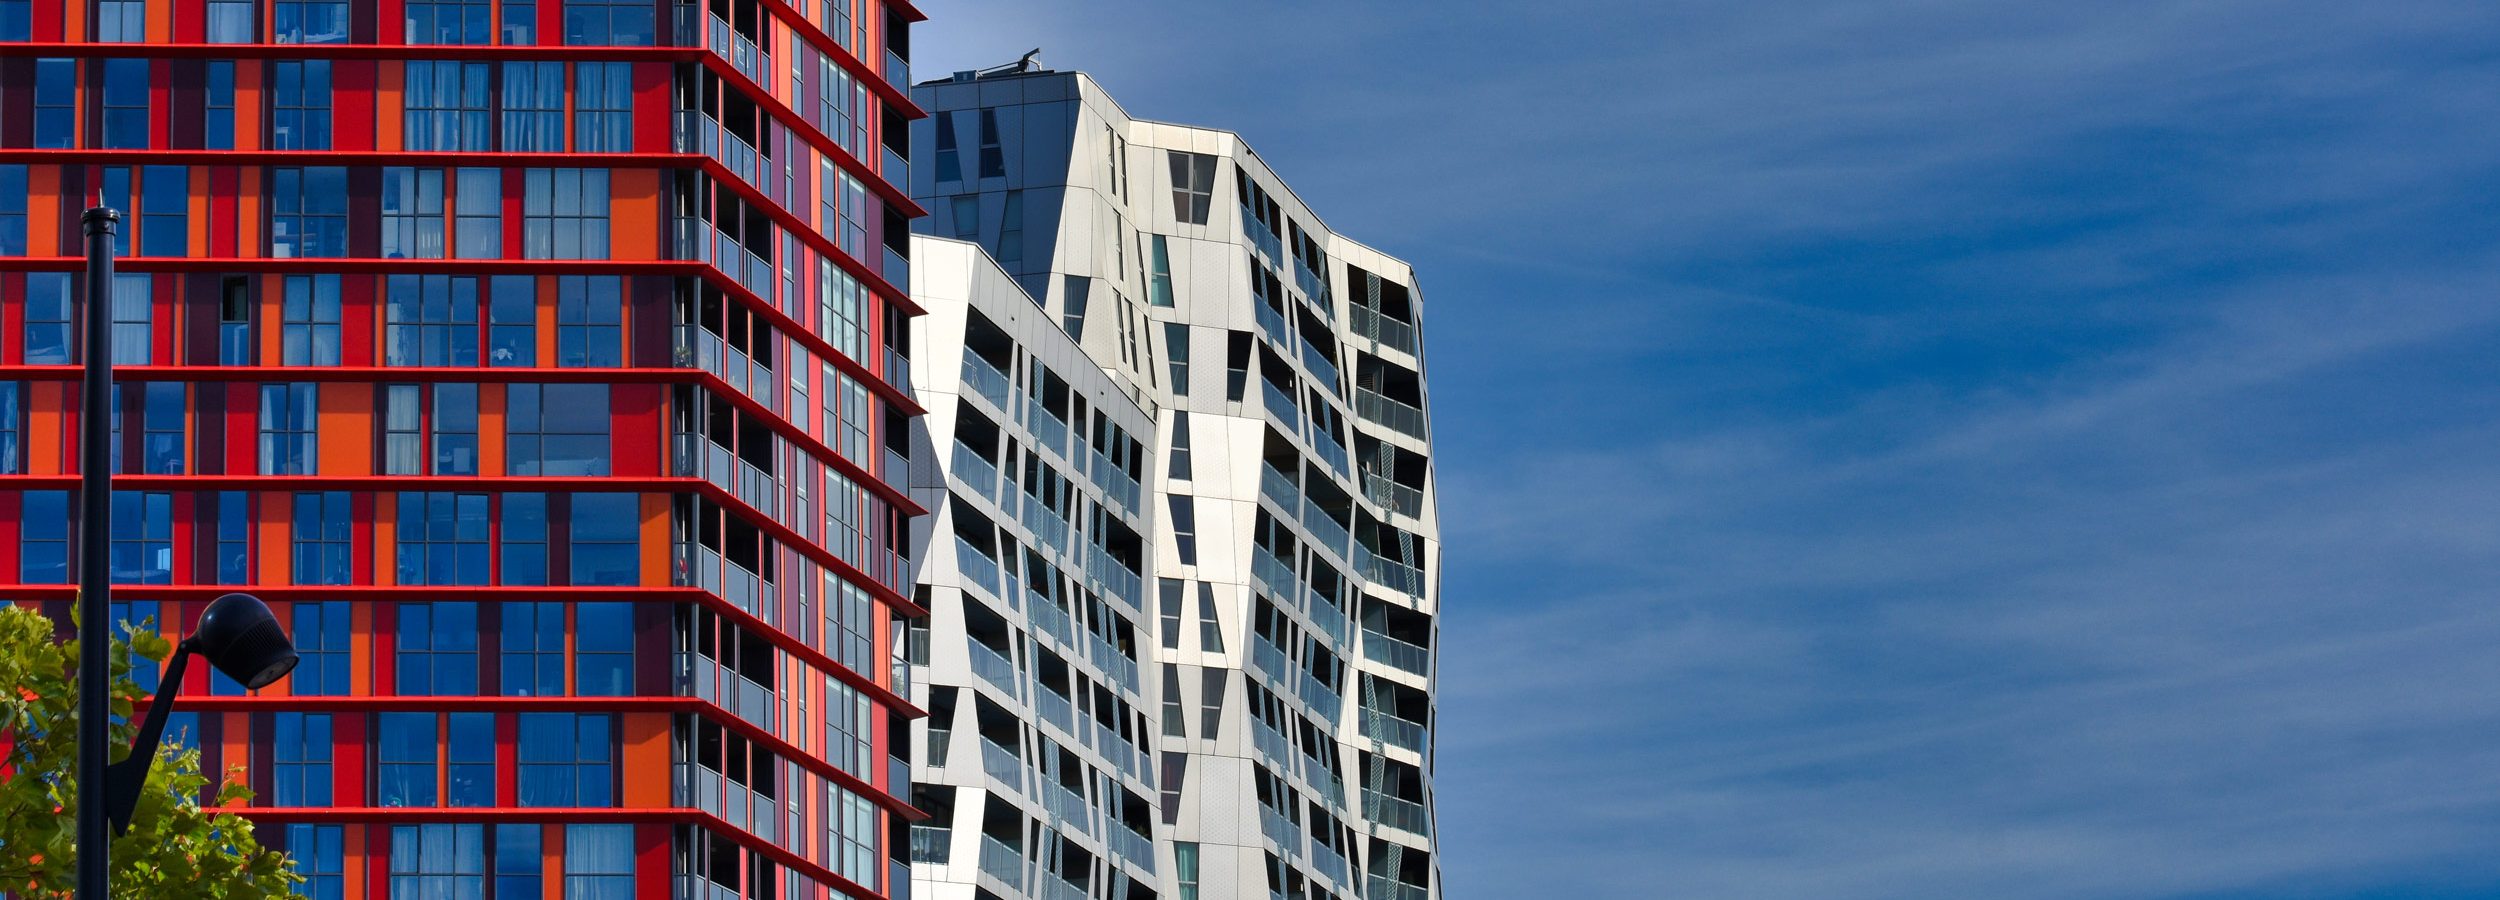 Nowoczesna architektura Rotterdamu - kompleks Calypso